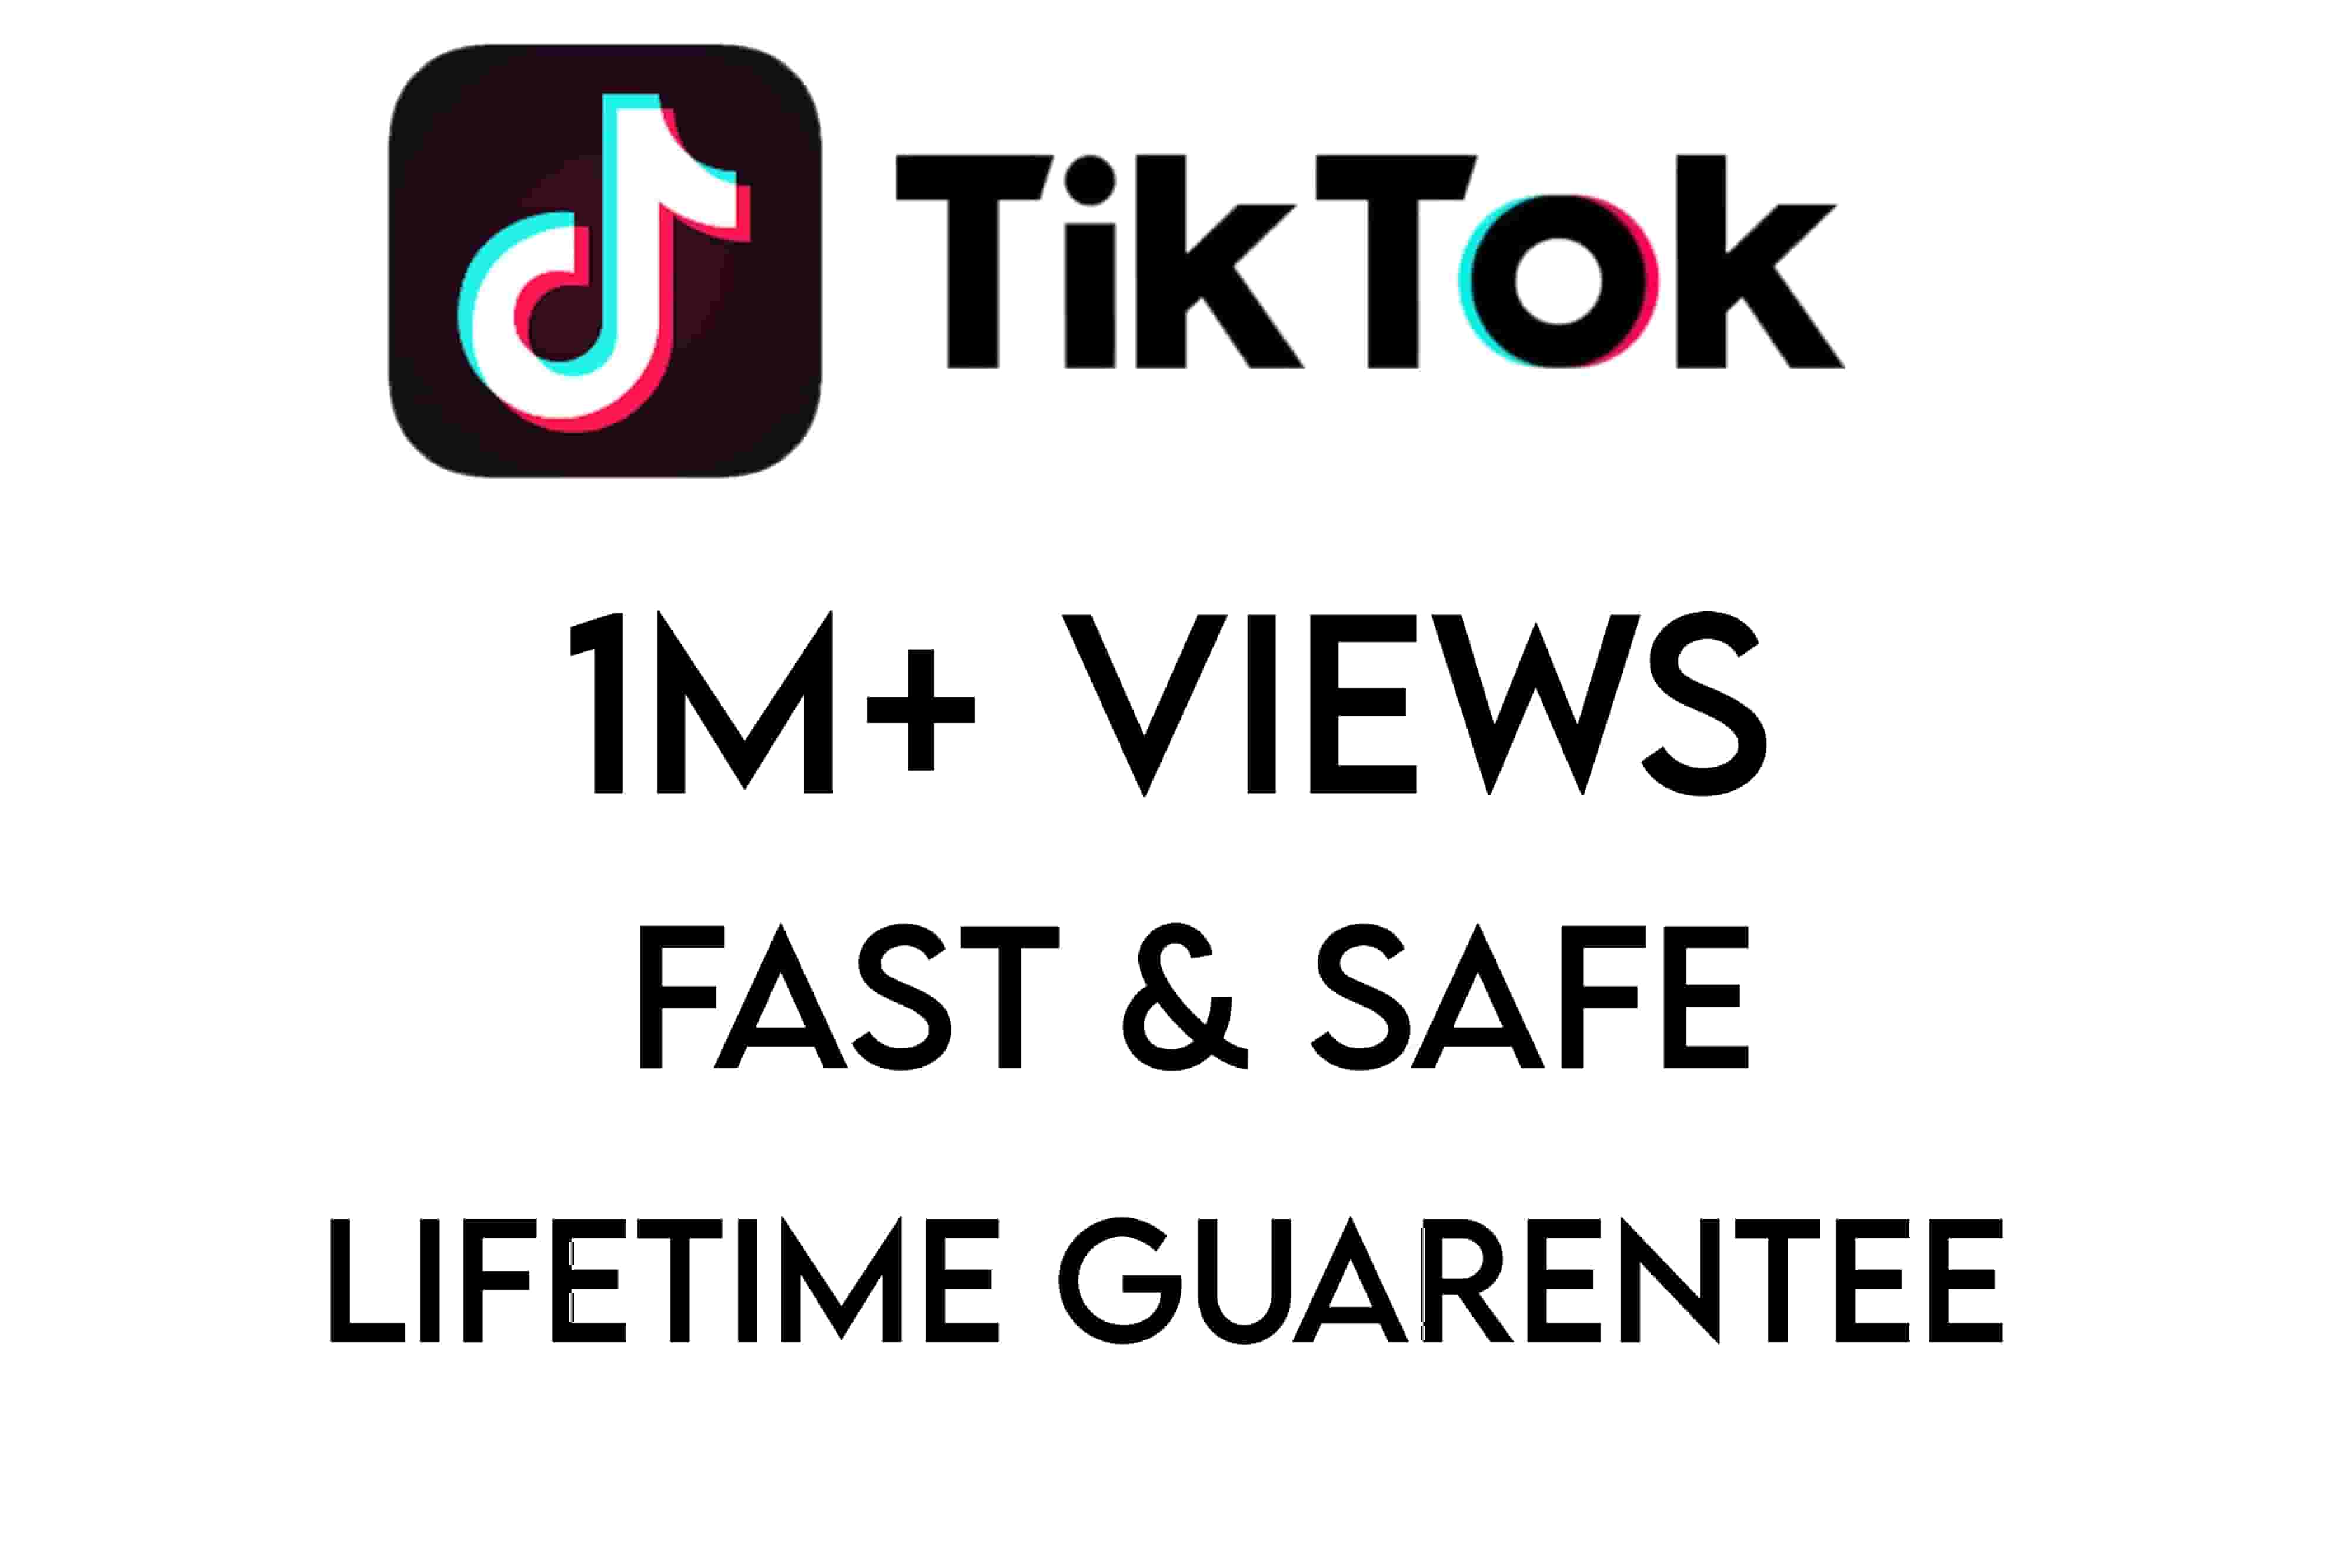 Tiktok 1M+ Views, Fast & Safe, Lifetime Guarentee.